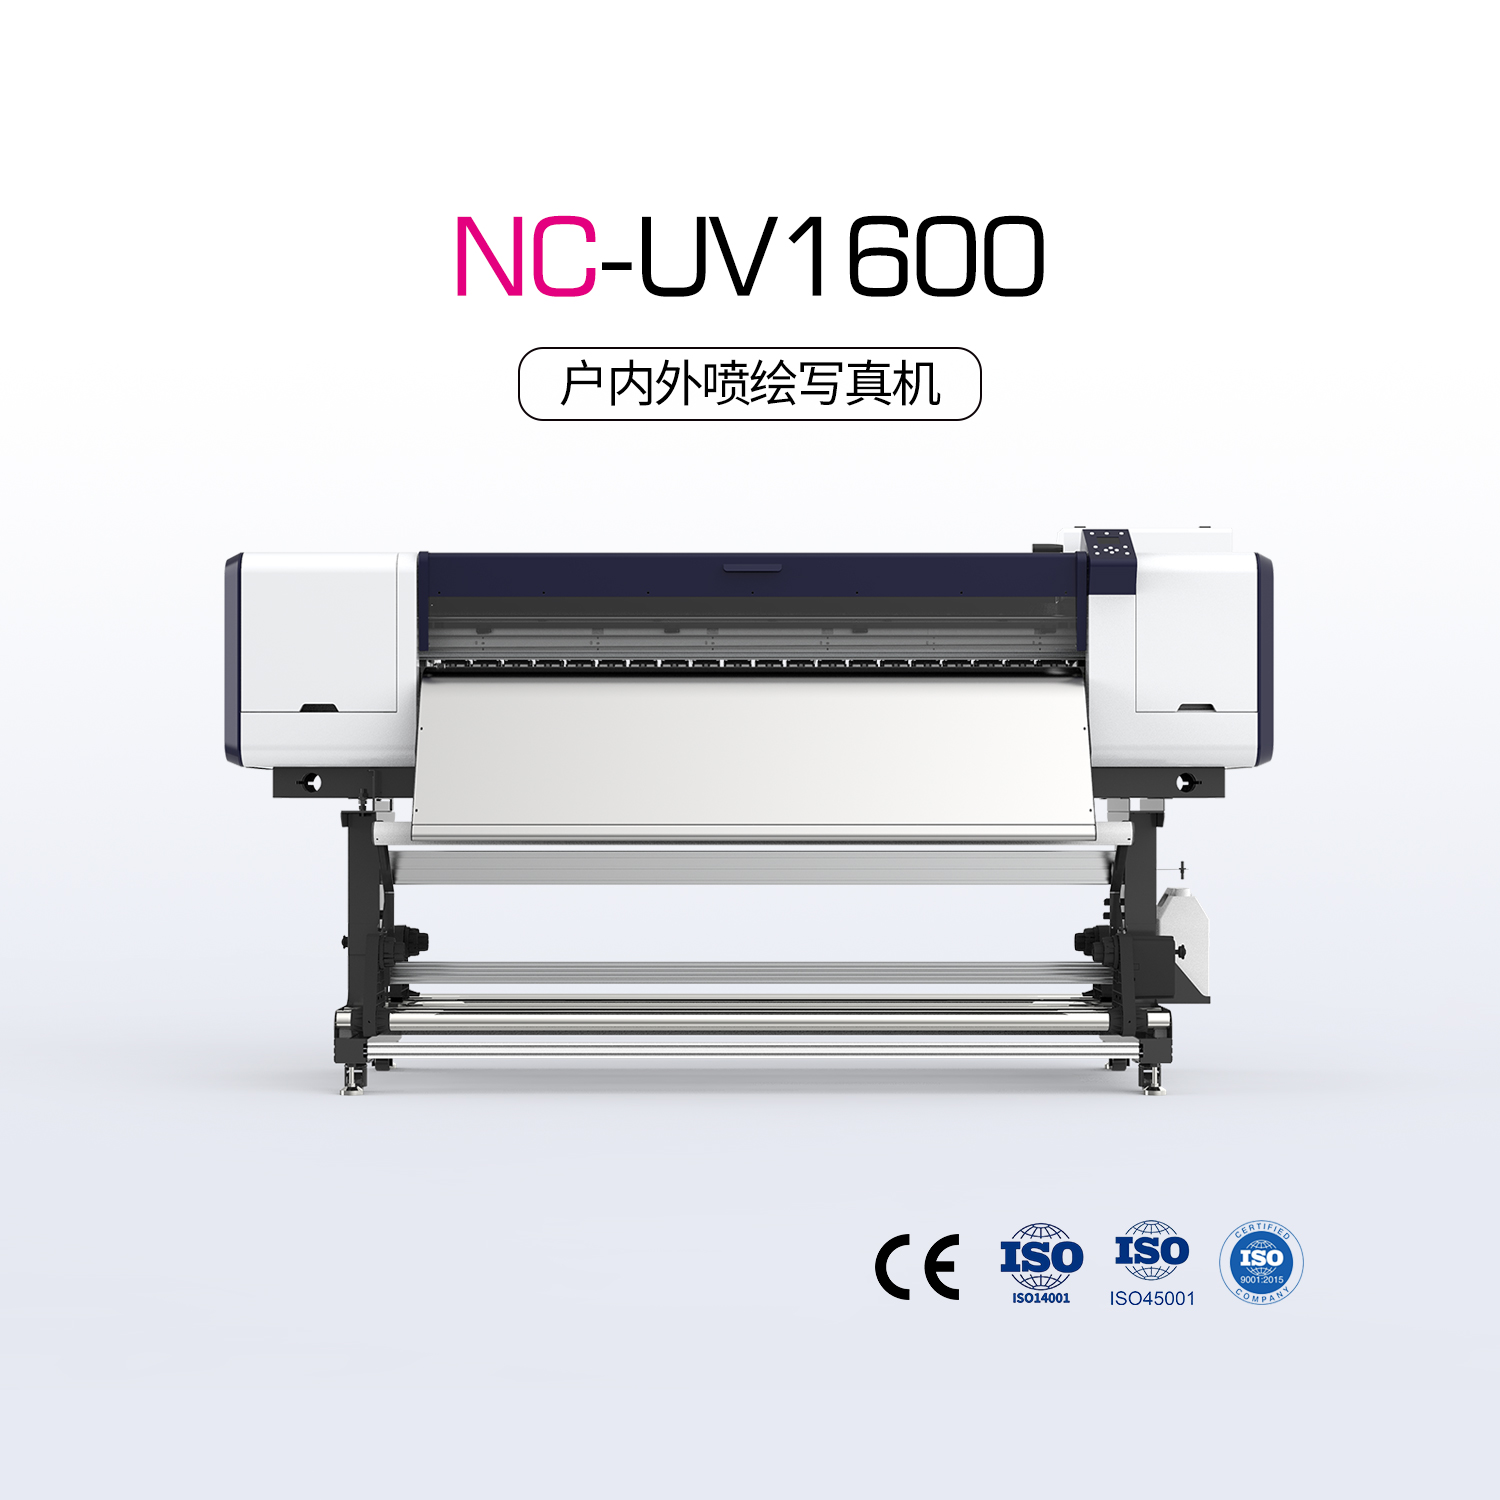 NC-UV1600（写真机）